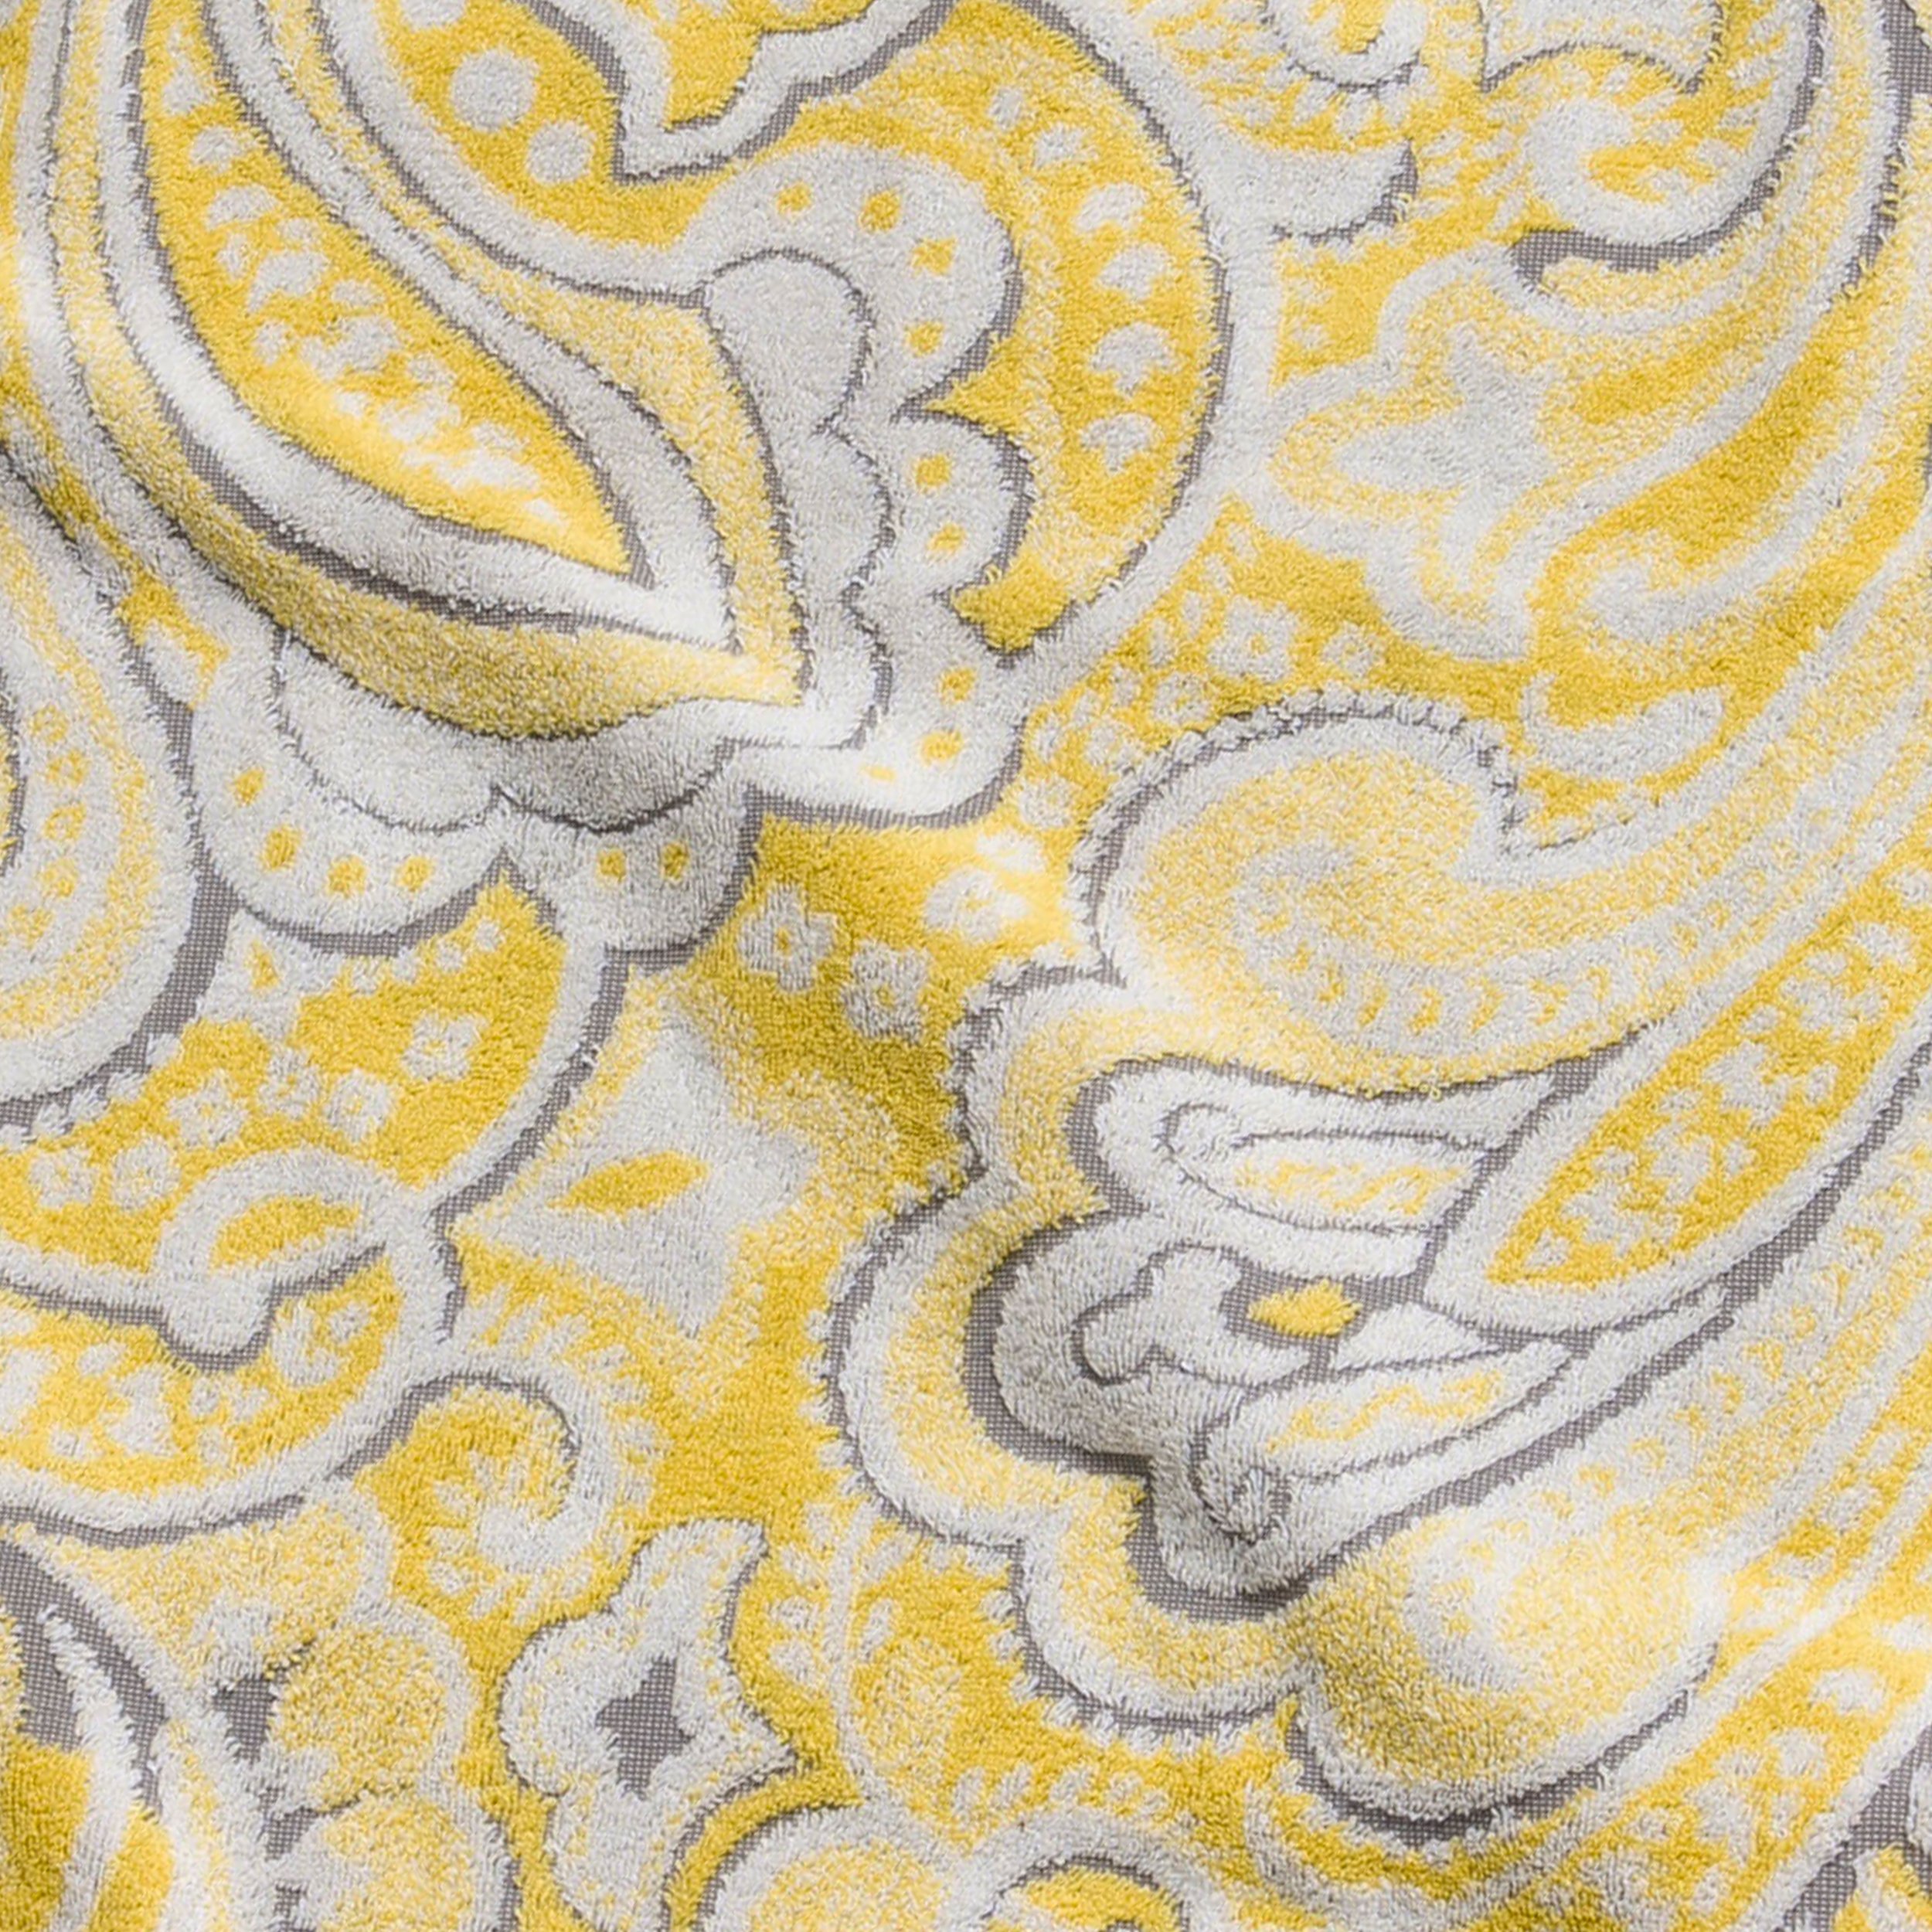 50X100 cm Ethno MÖVE Gelb (yellow)| Handtuch MÖVE